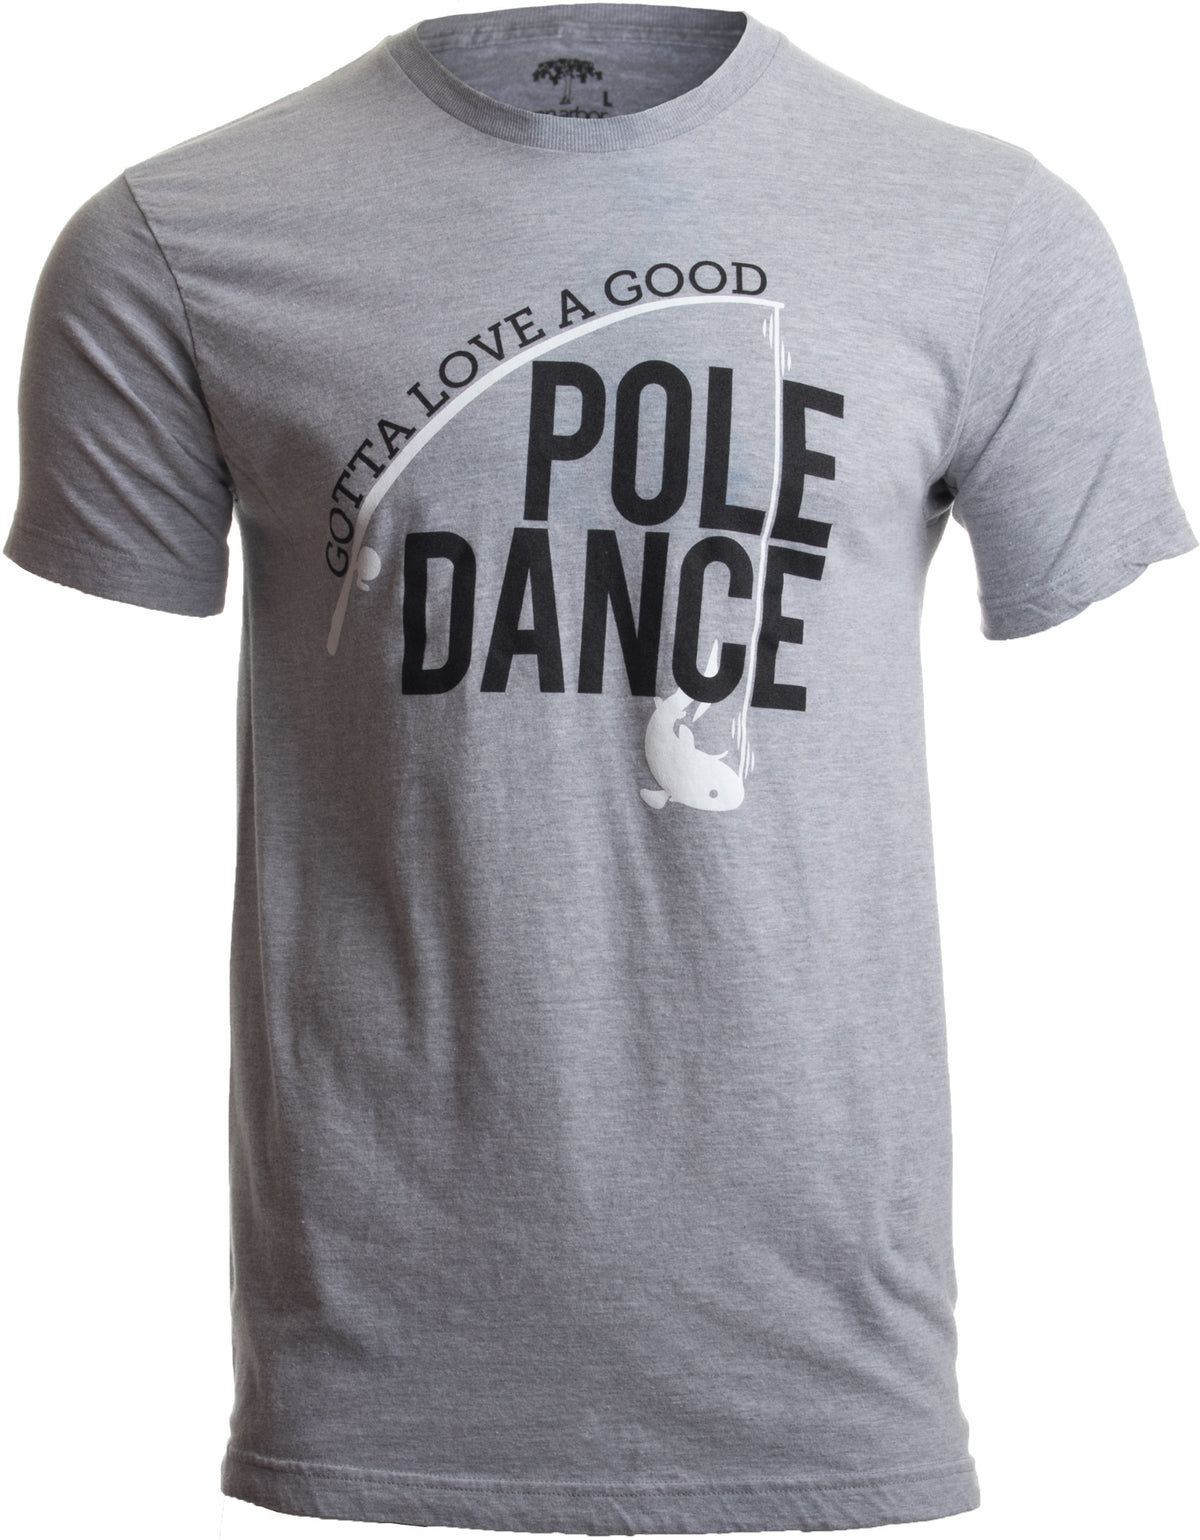 Gotta Love a Good Pole Dance - Funny Fishing Saying Fisherman Men T-shirt